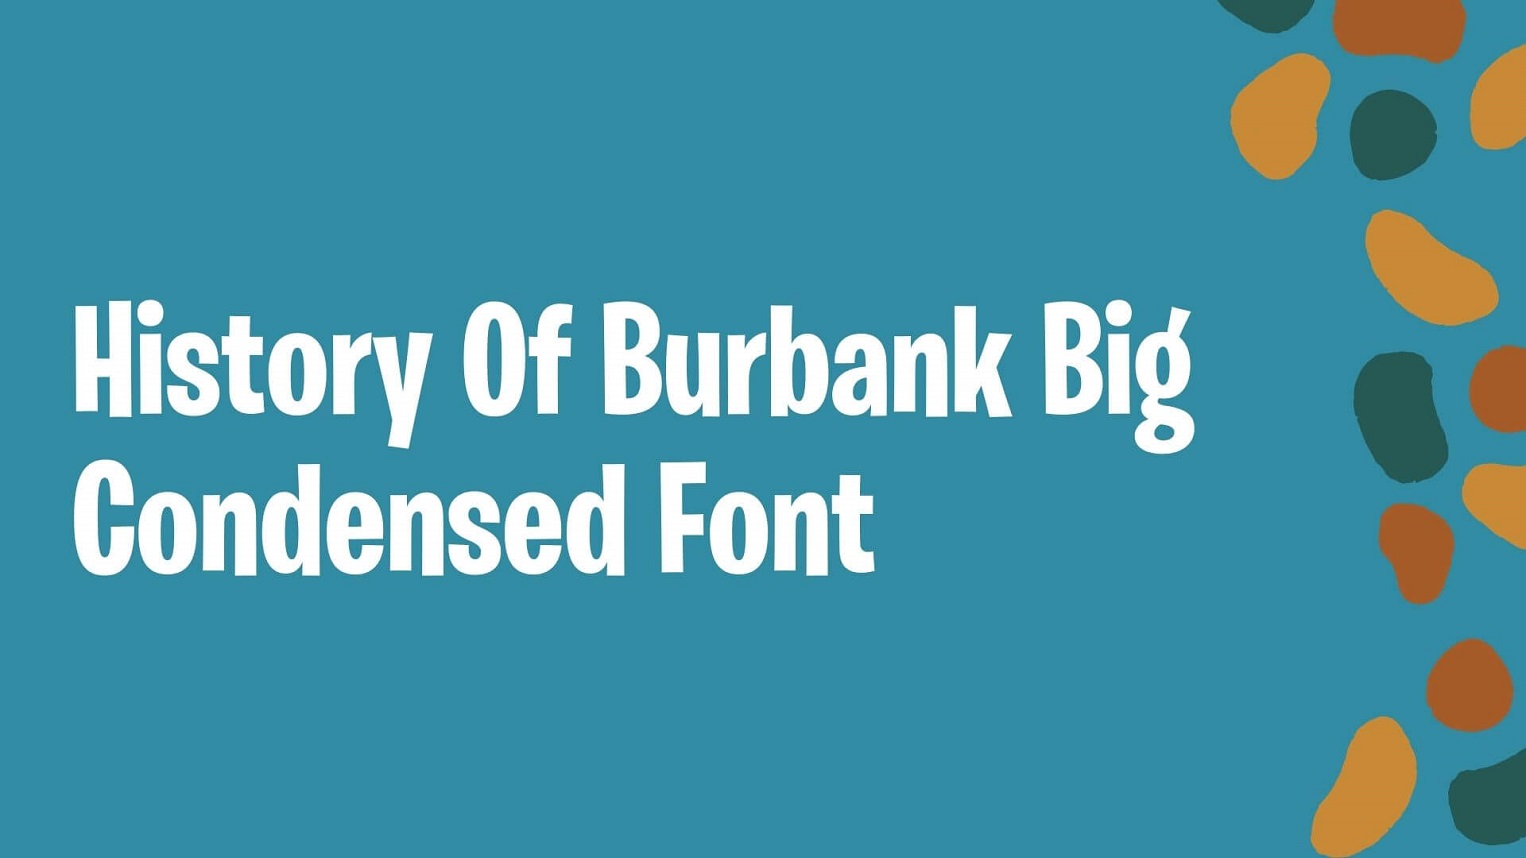 History of Burbank Big Condensed Fon